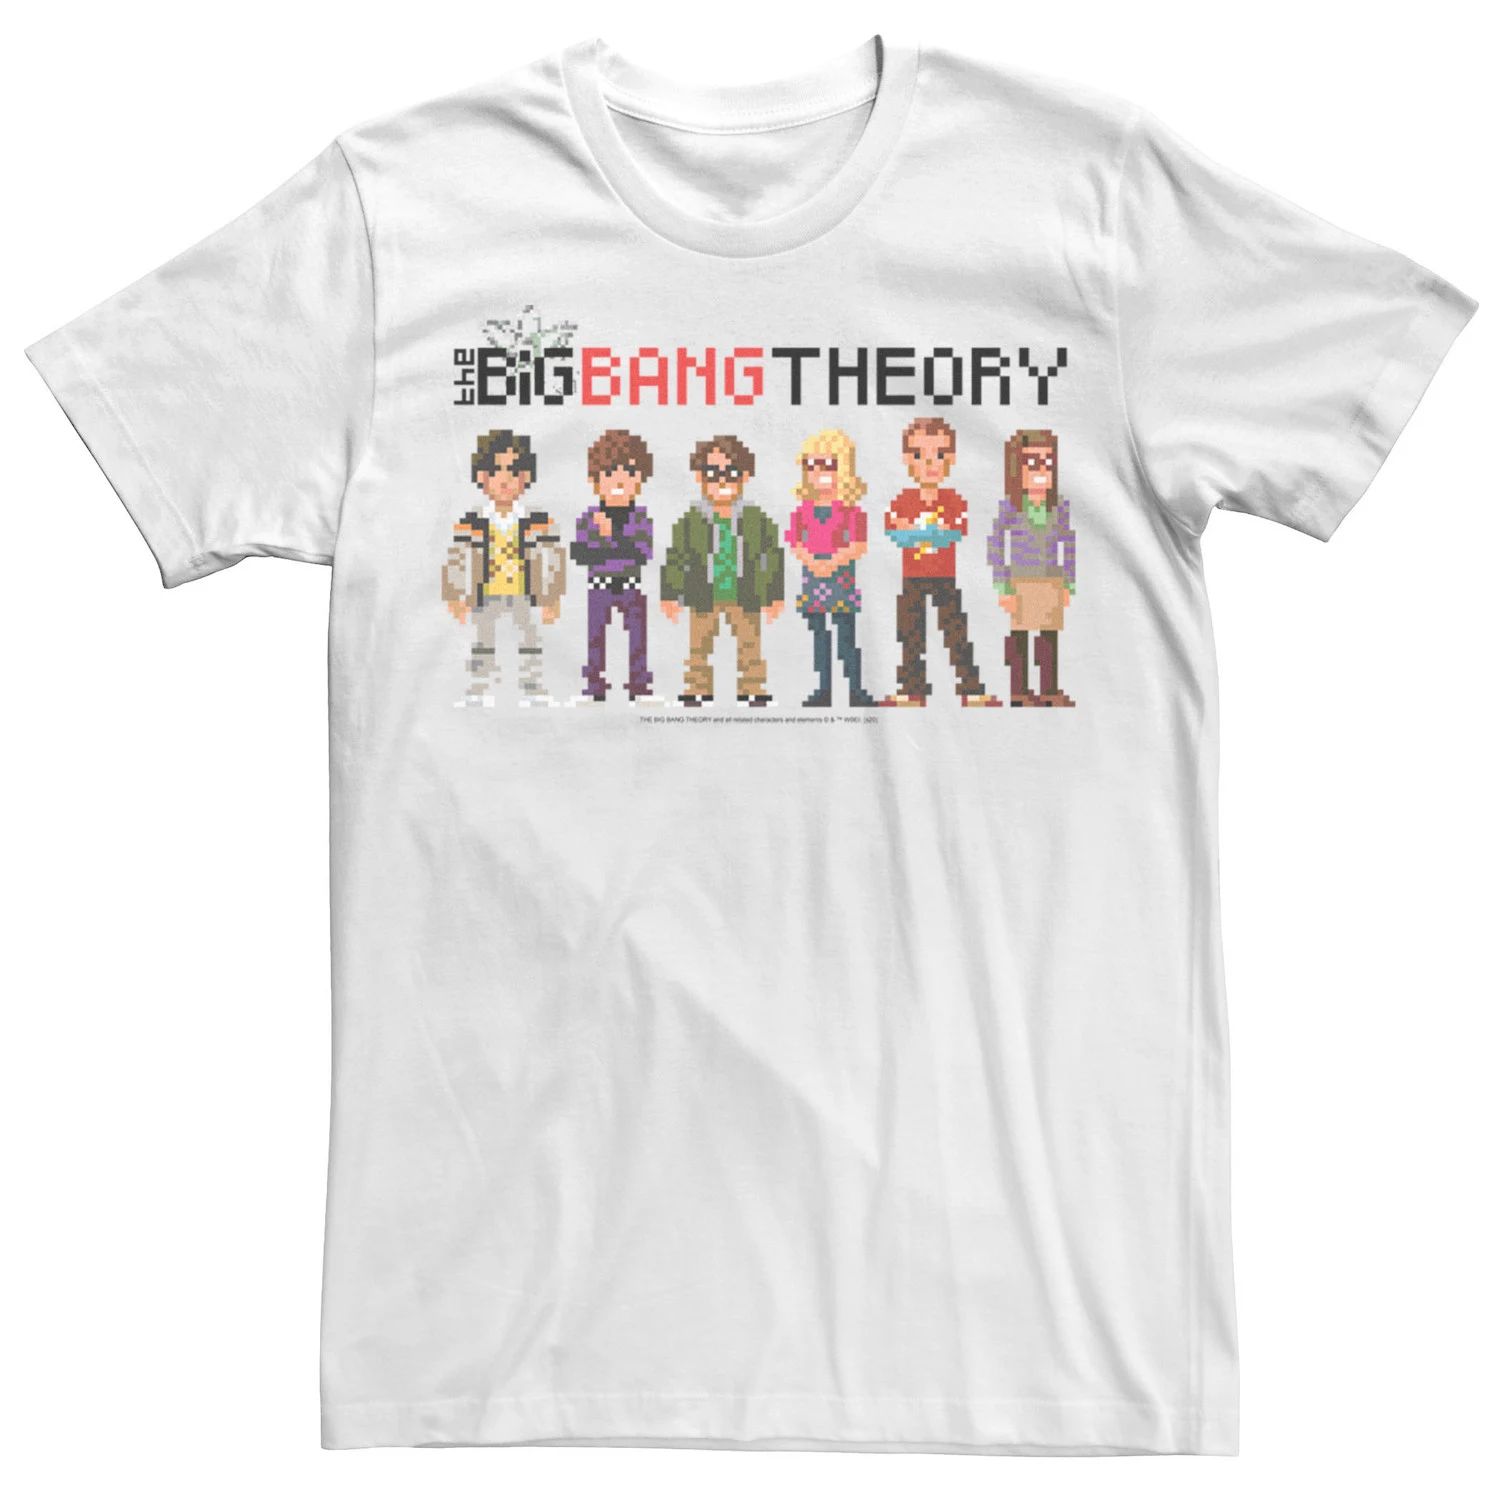 

Мужская футболка с пикселями «Теория большого взрыва» Group Shot Licensed Character